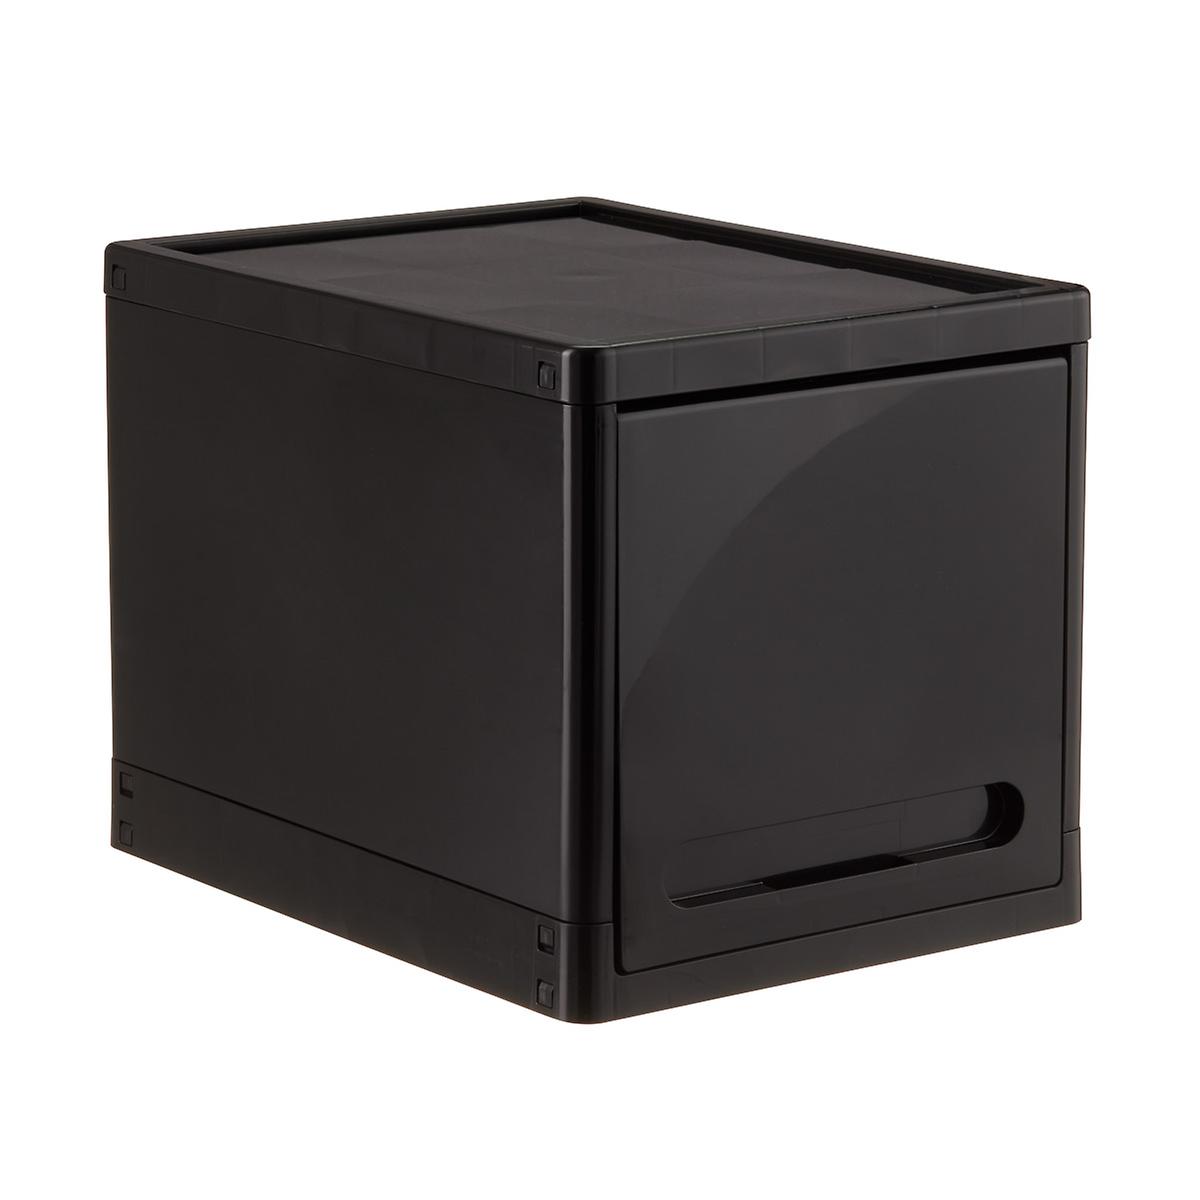 Black Plastic Storage Cube with Retractable Door The